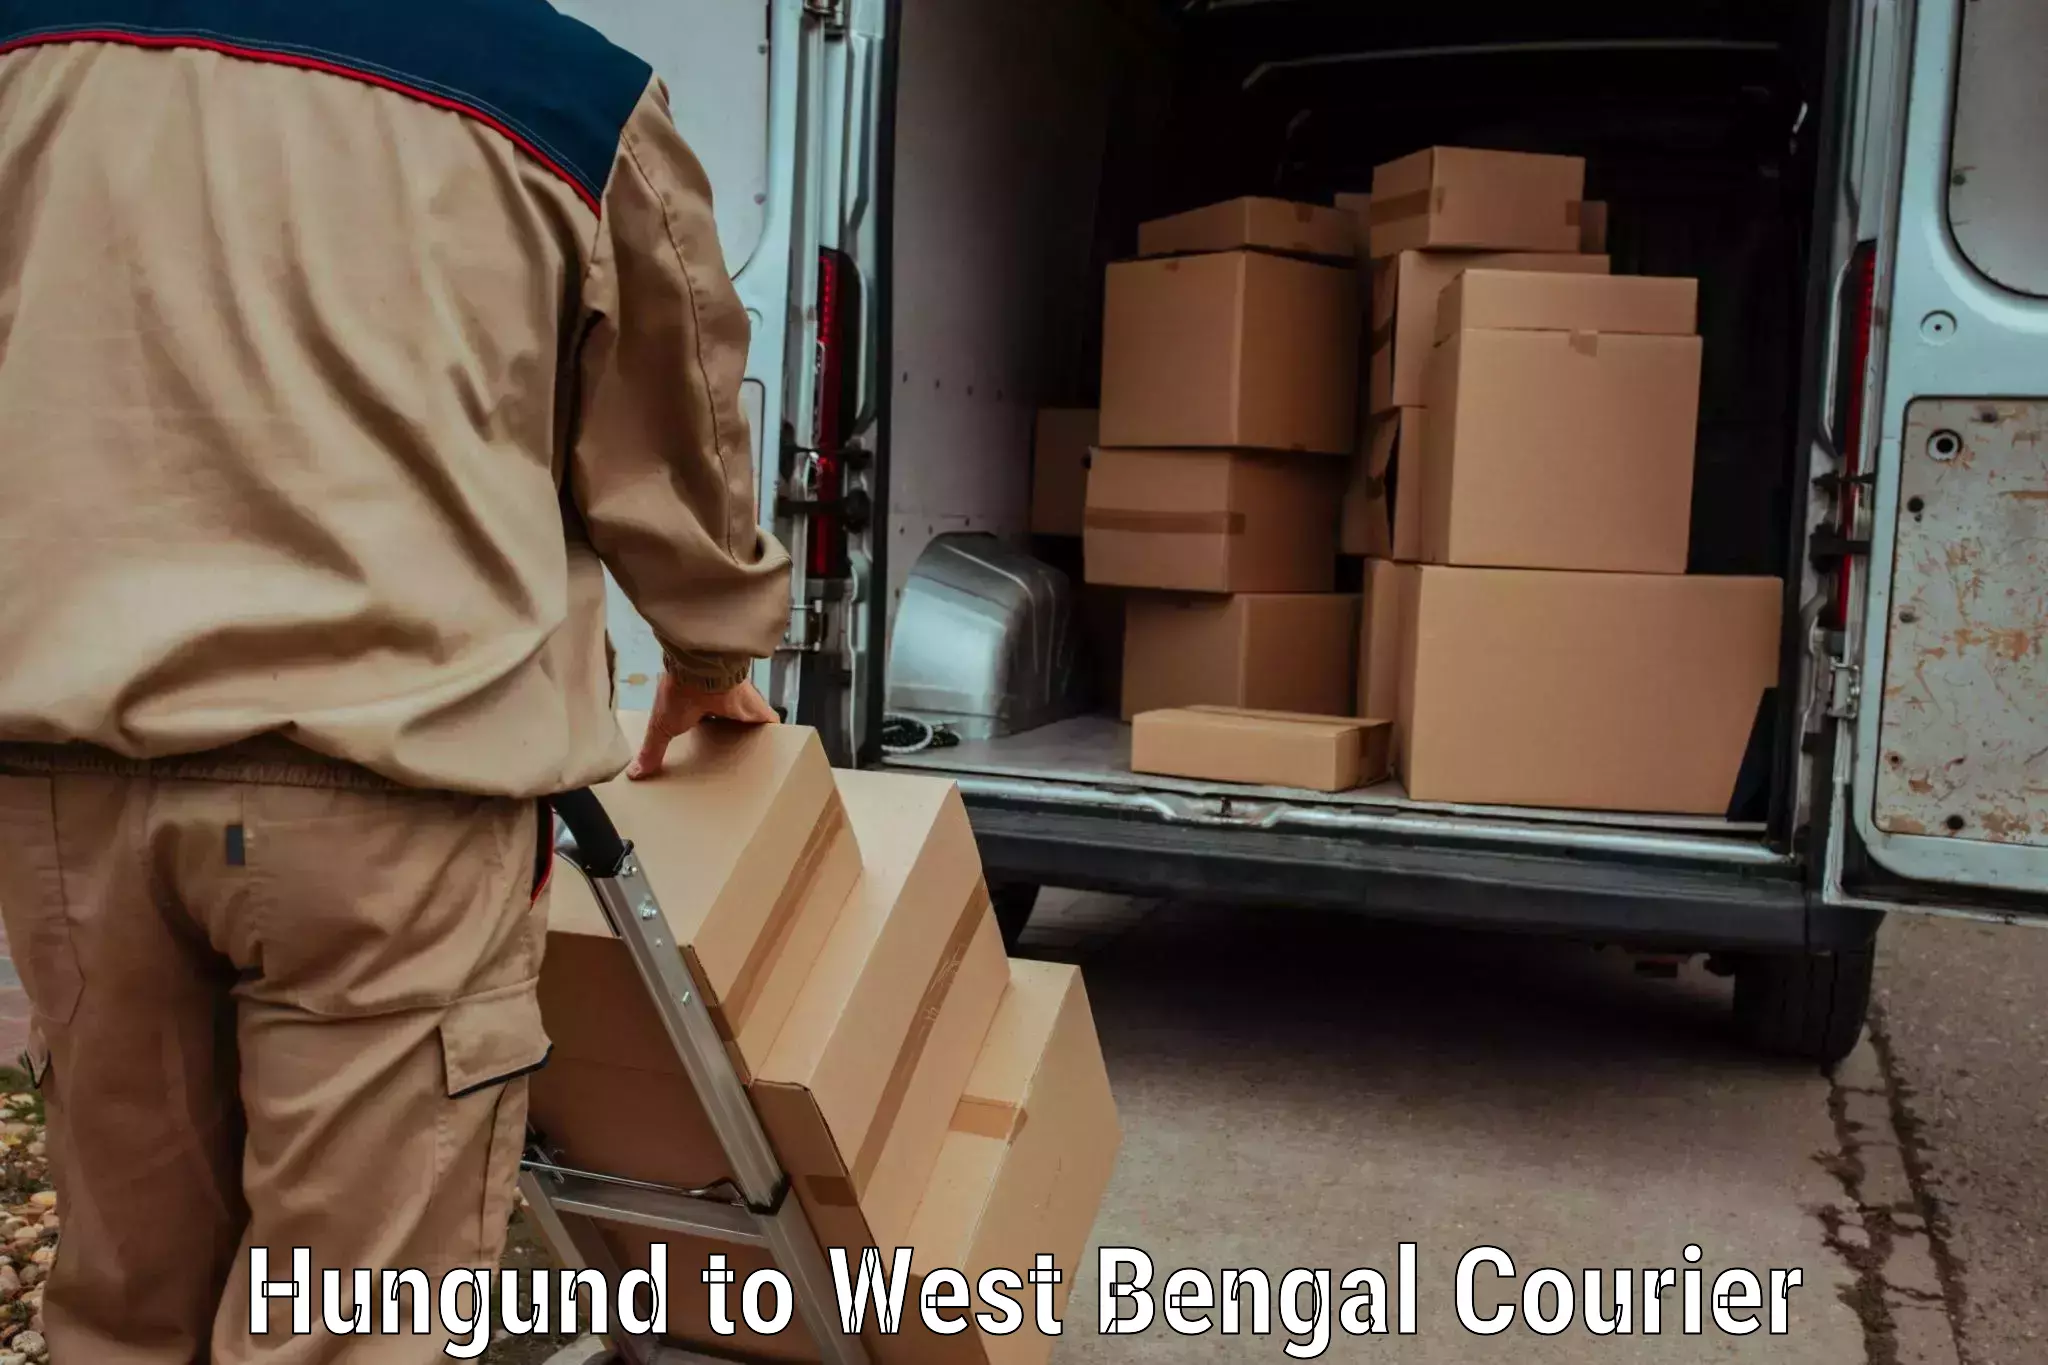 Next-day delivery options Hungund to Kolkata Port